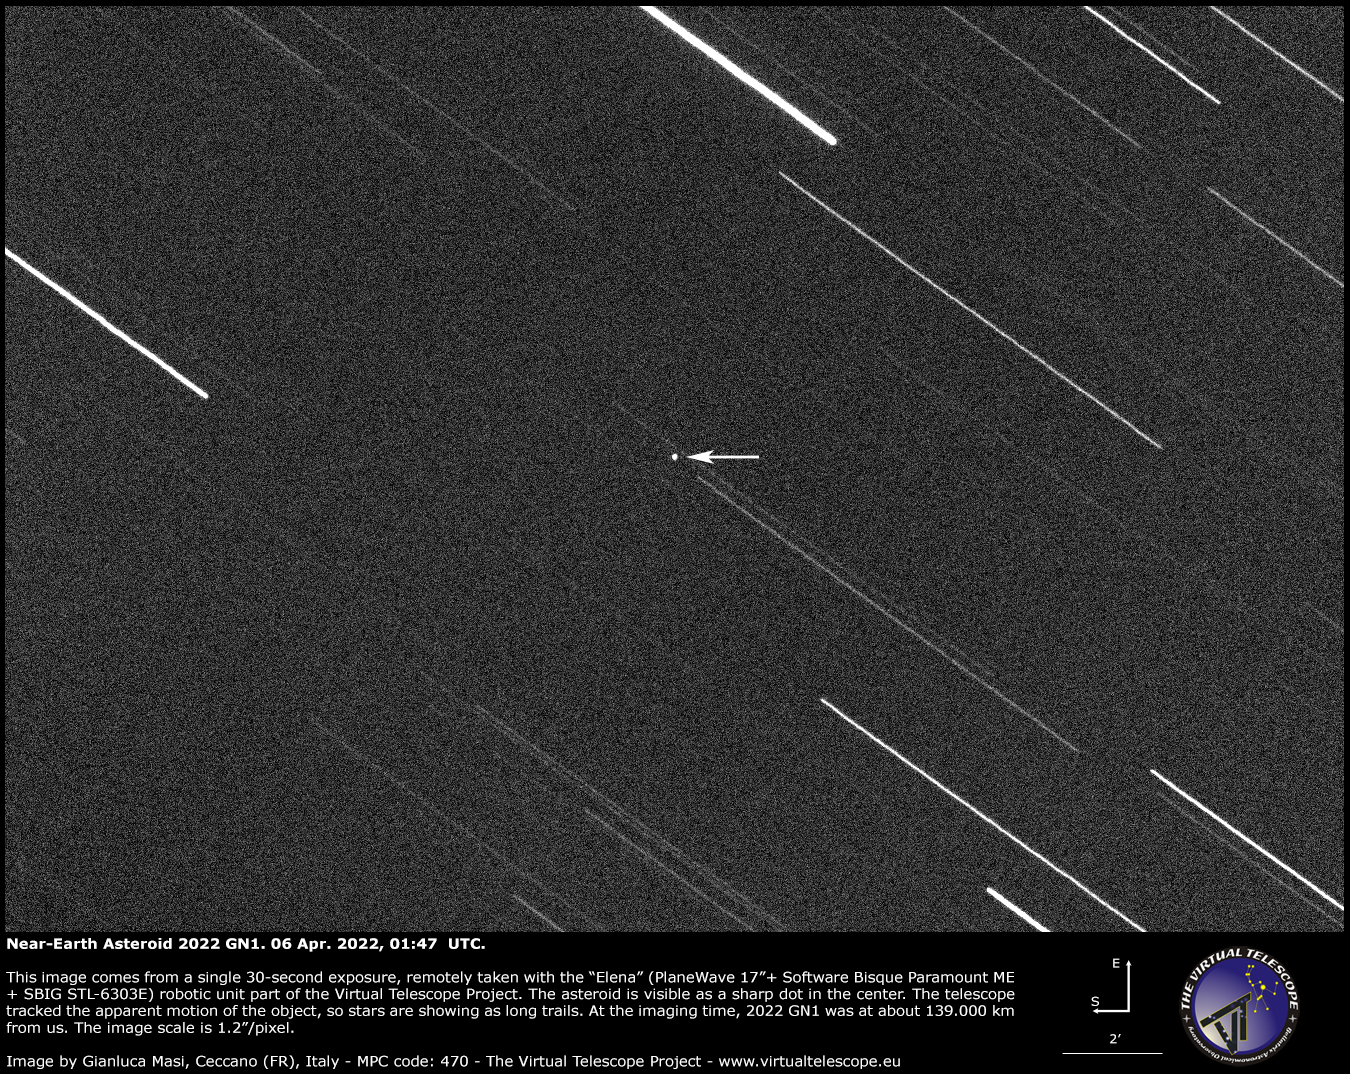 Near-Earth Asteroid 2022 GN1: 6 Apr. 2022.